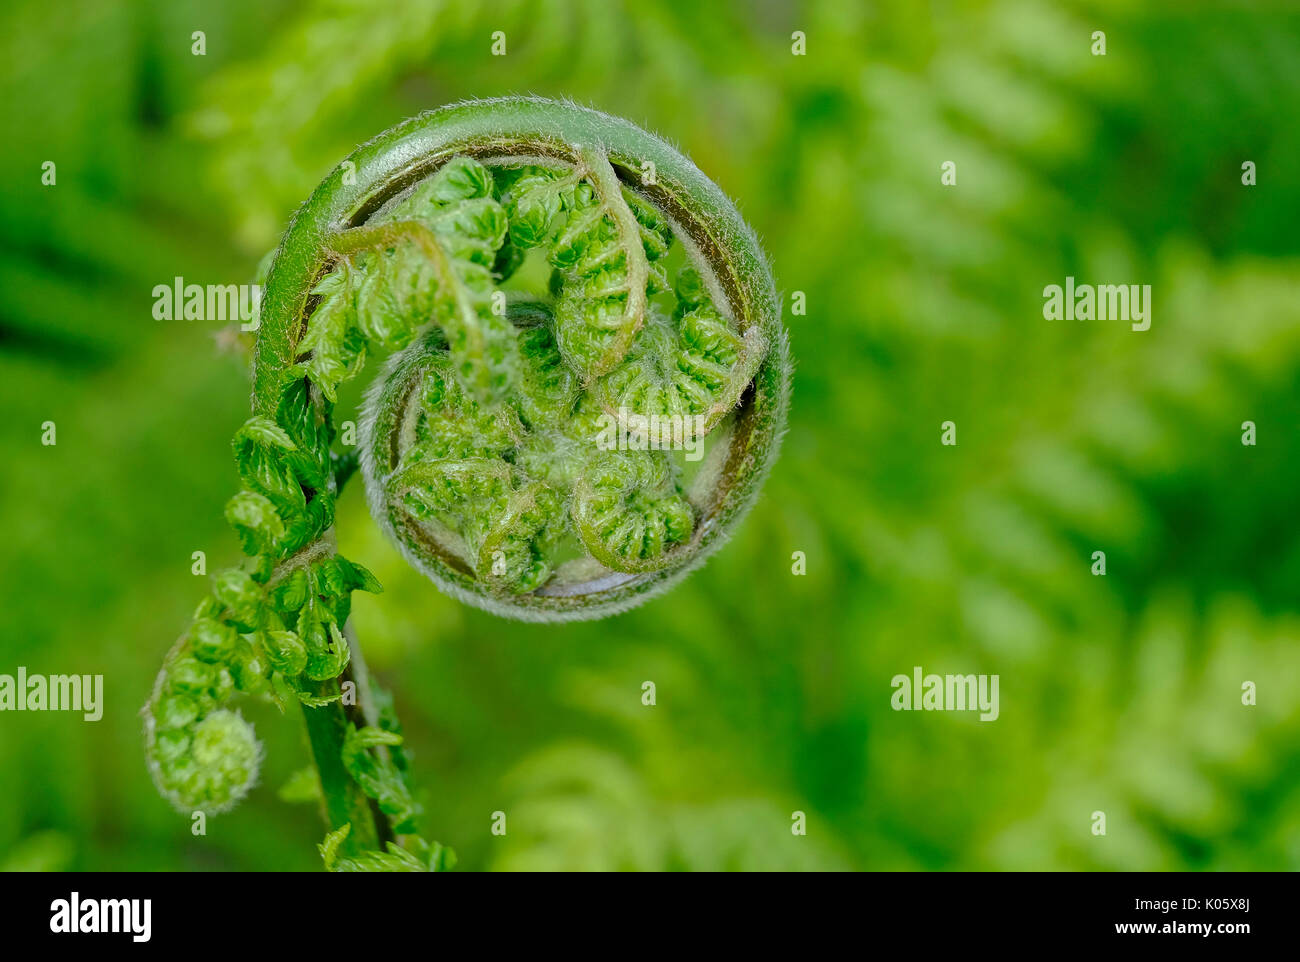 tree fern frond unwinding on green blurred background Stock Photo